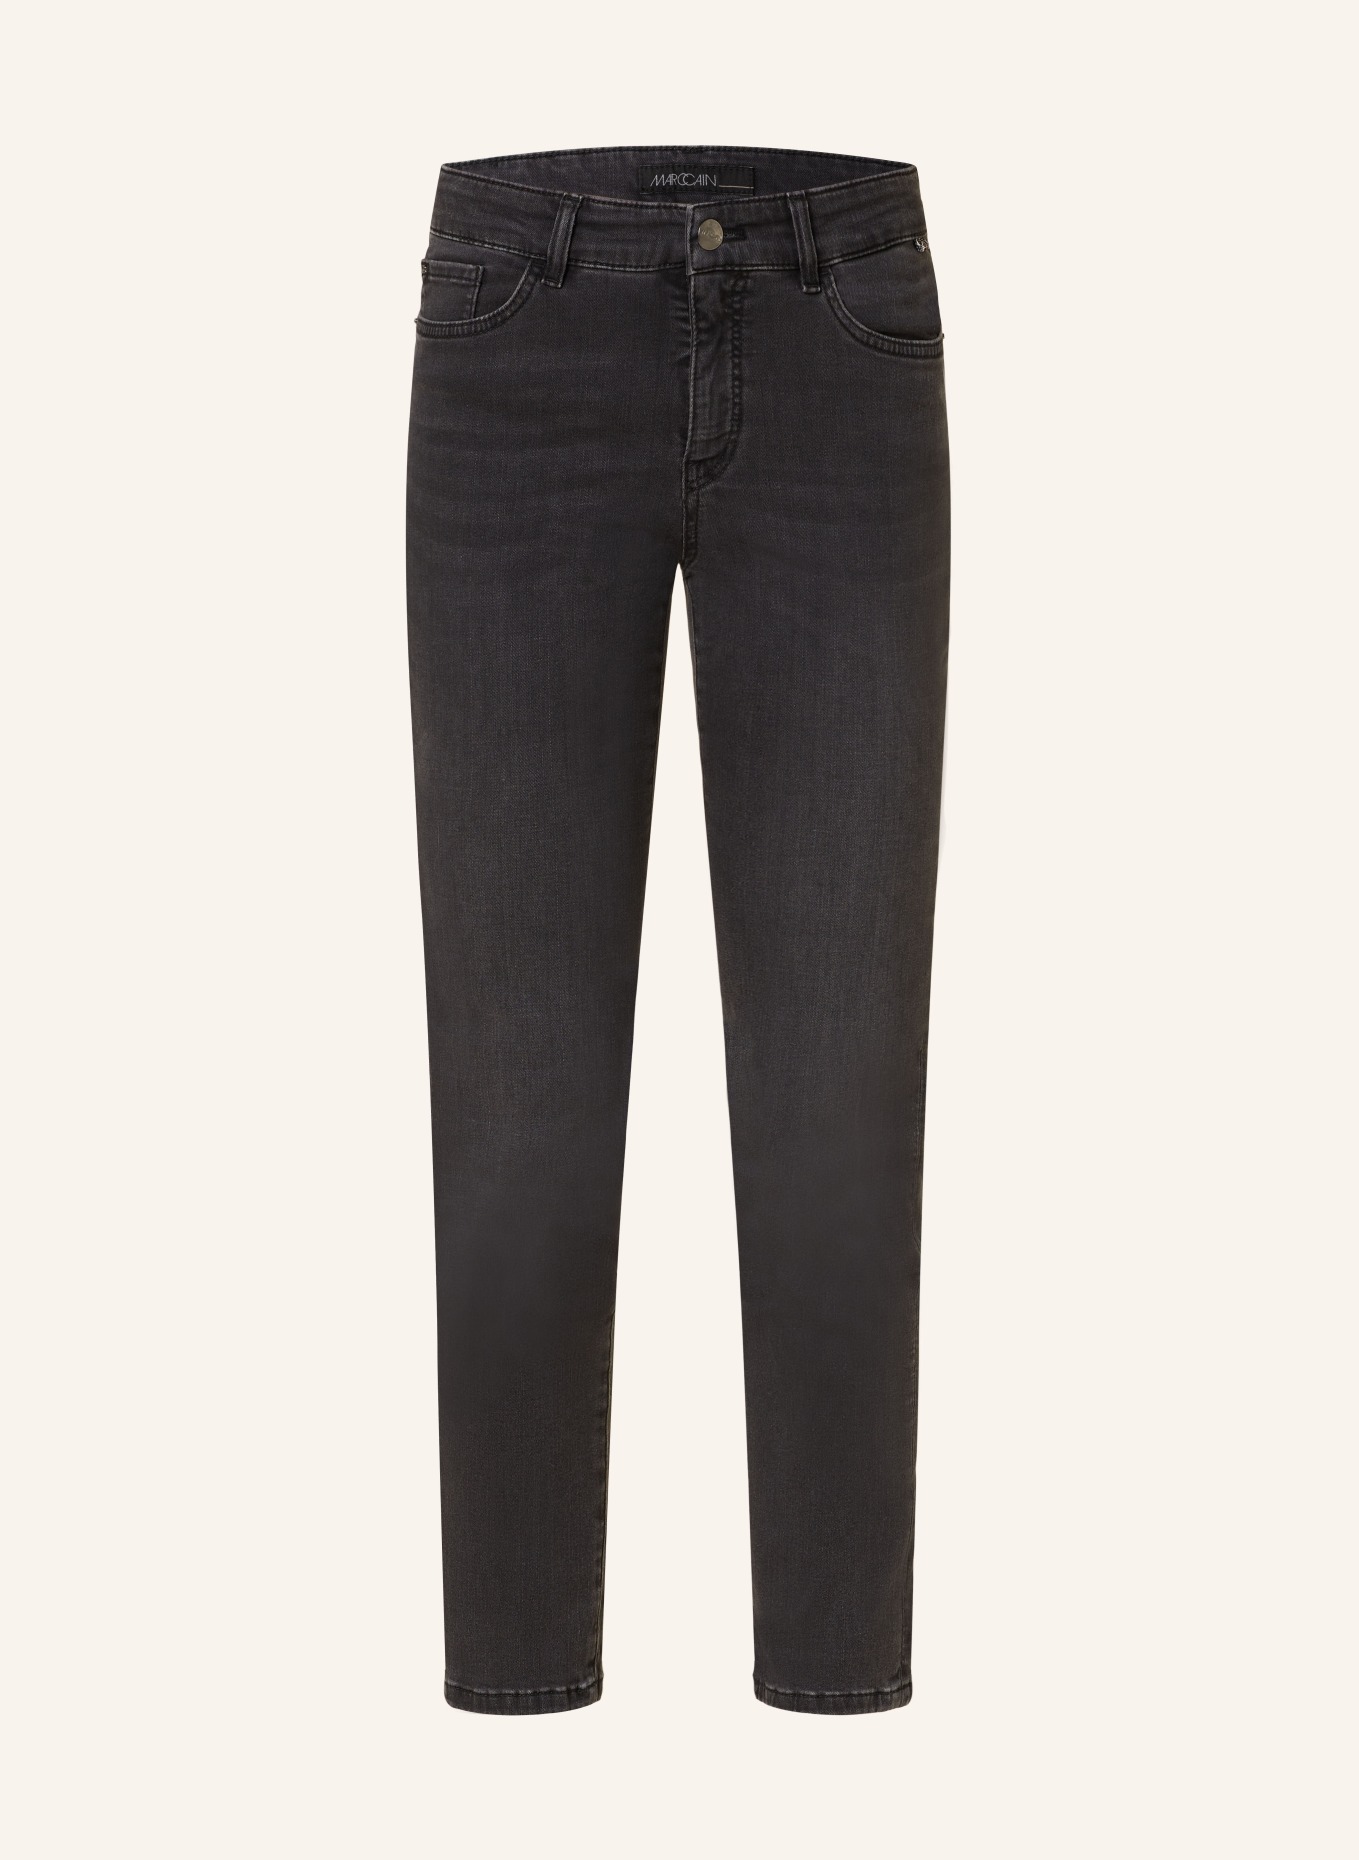 MARC CAIN Jeans, Farbe: 880 anthrazit(Bild null)